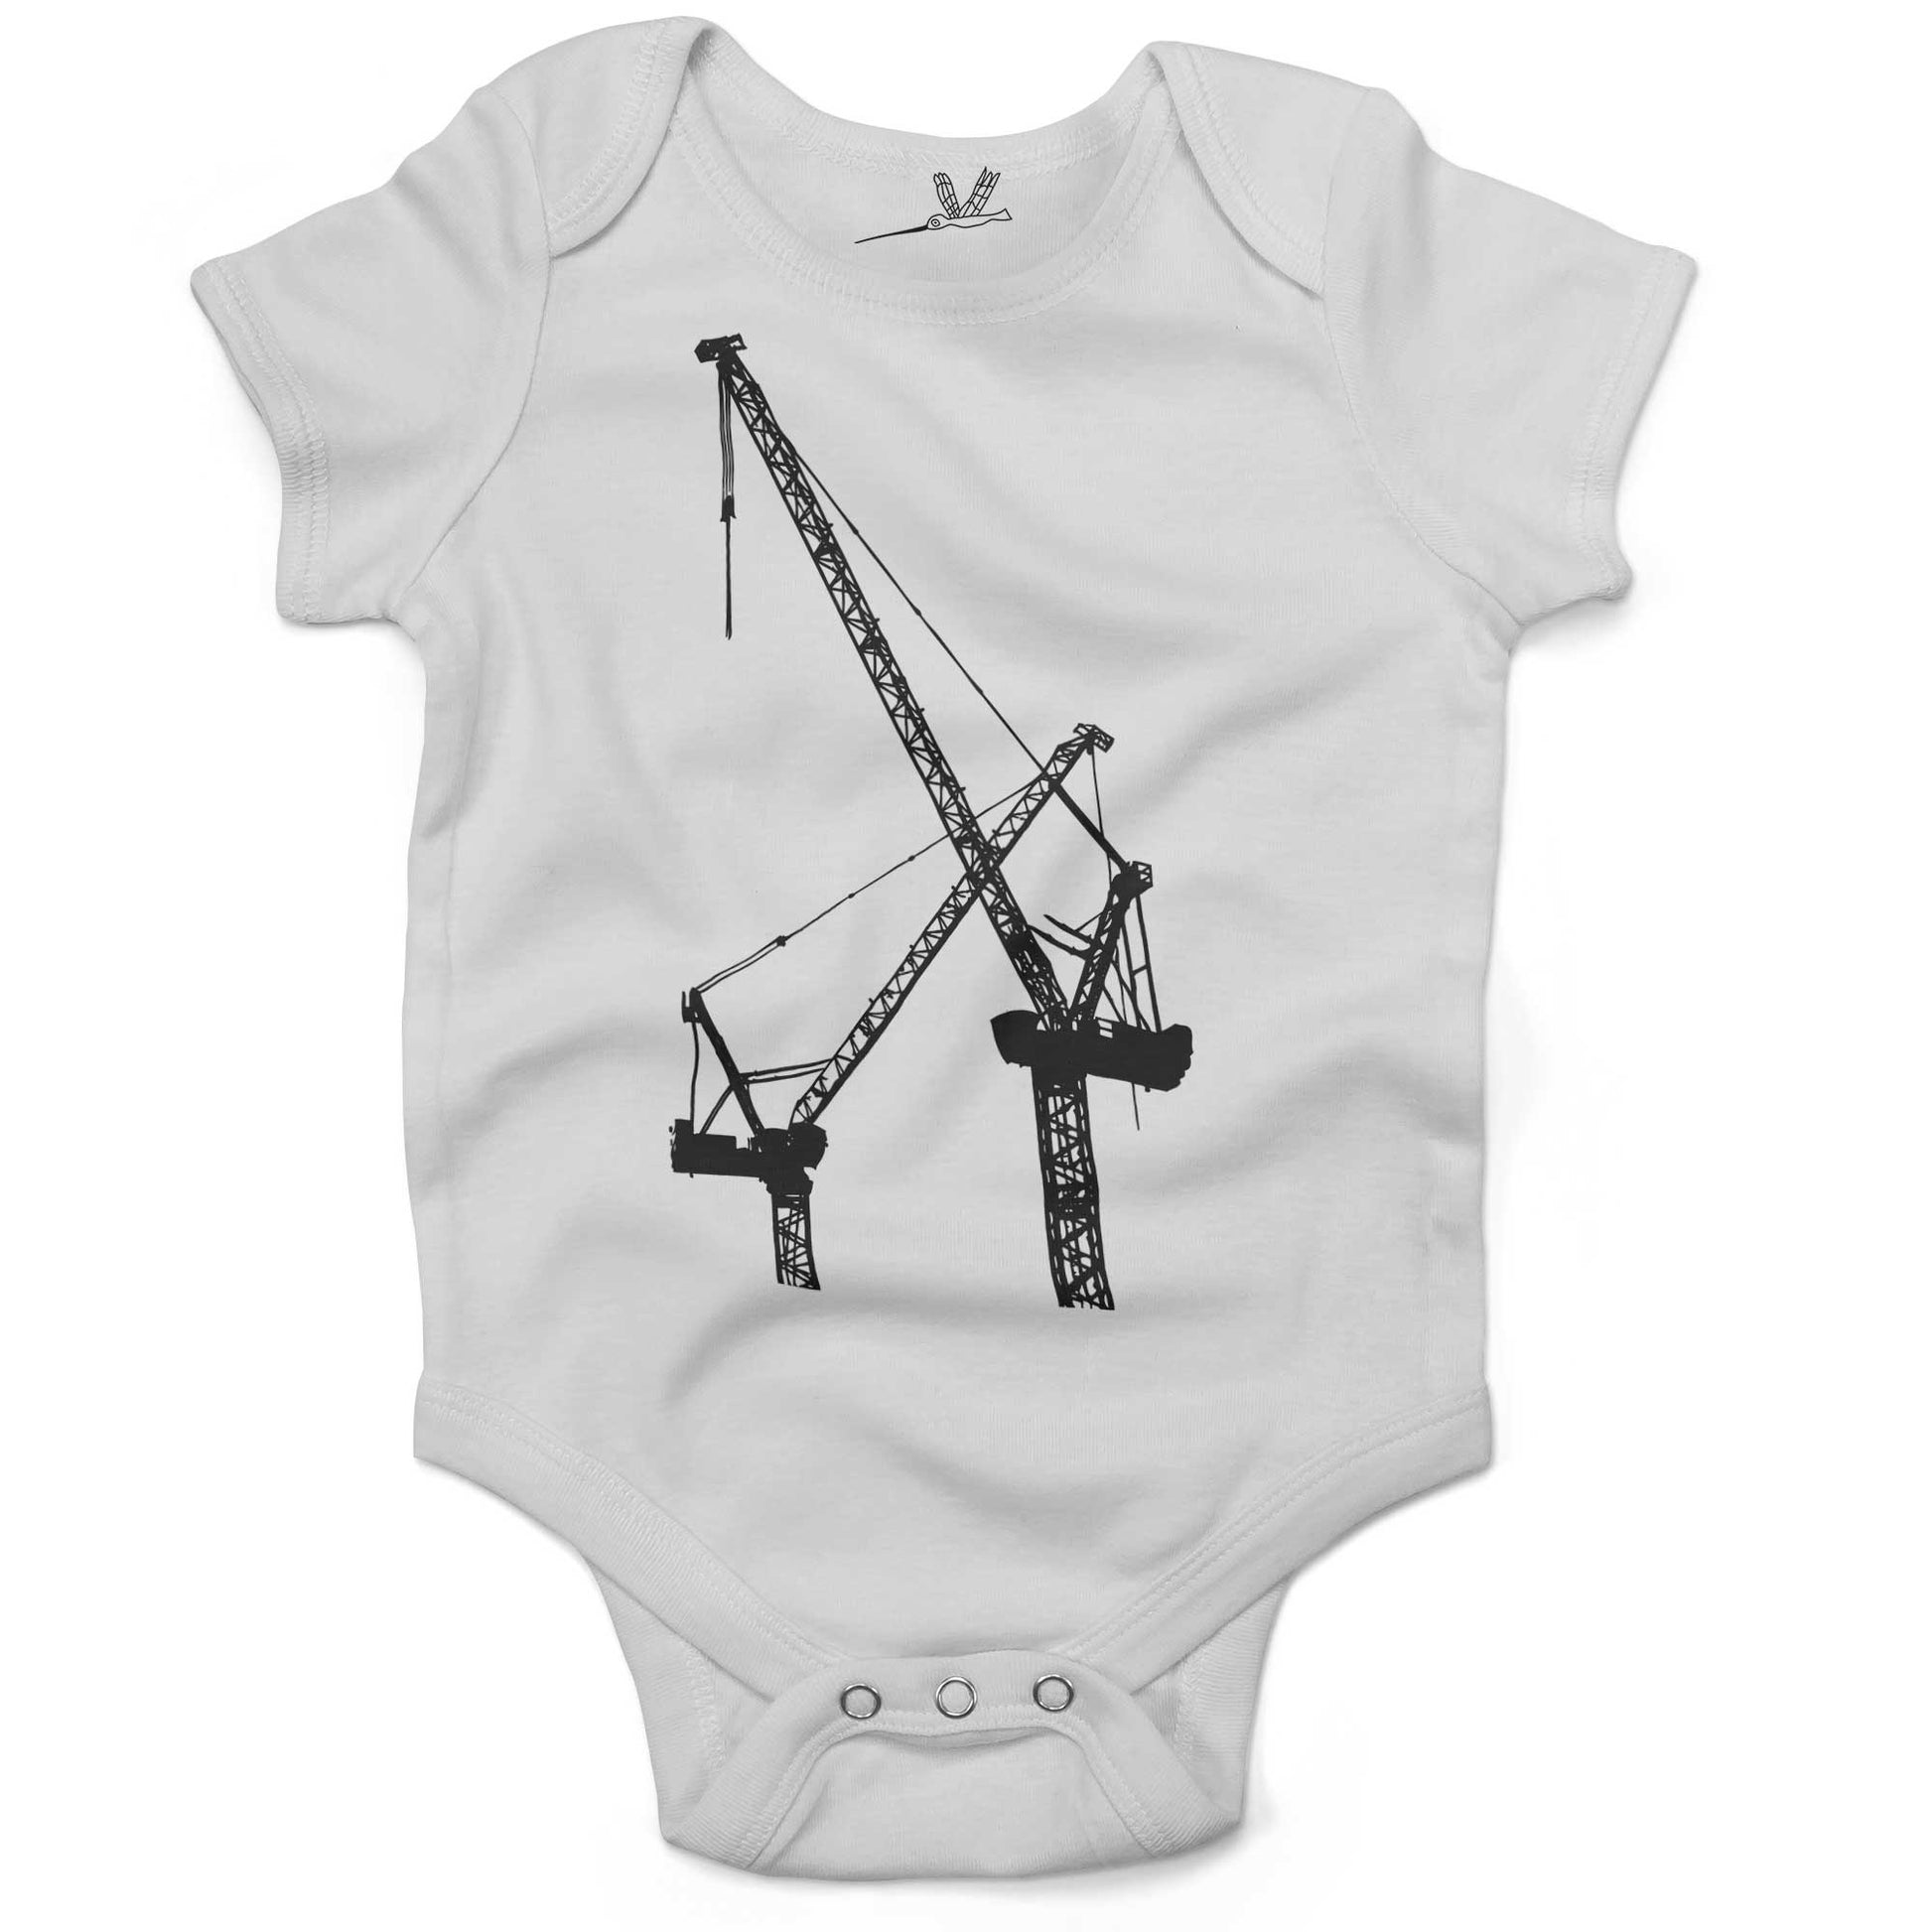 Construction Cranes Infant Bodysuit or Raglan Tee-White-3-6 months